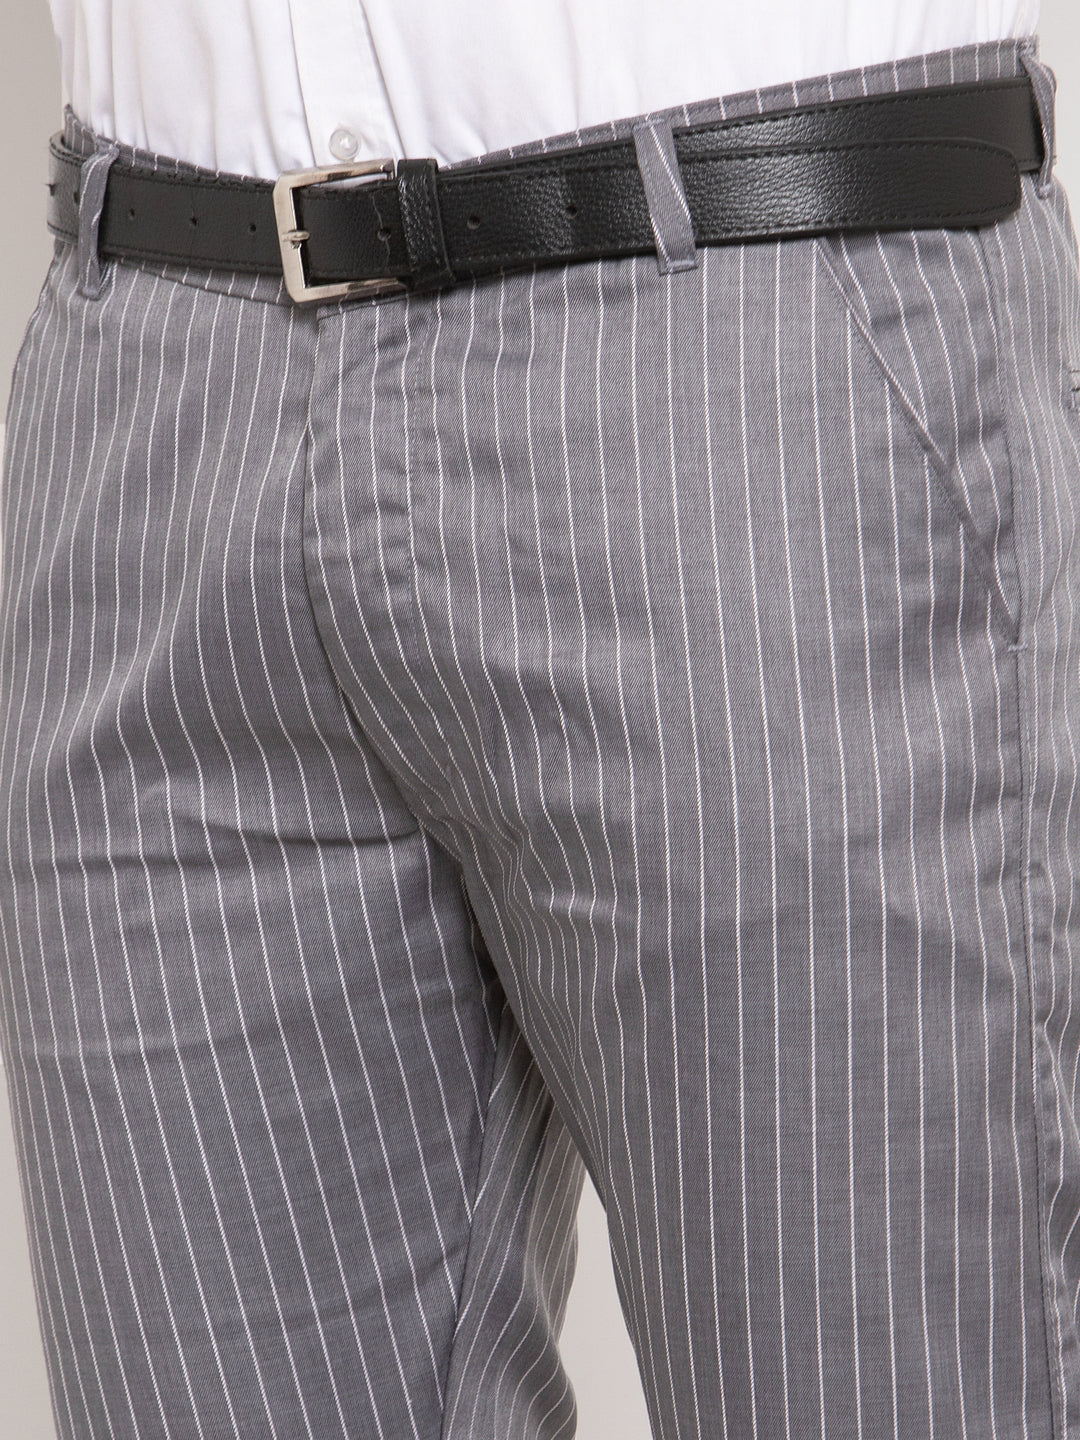 Korean Mens Slim Fit Striped Trousers Business Formal Pants High waist  British L | eBay